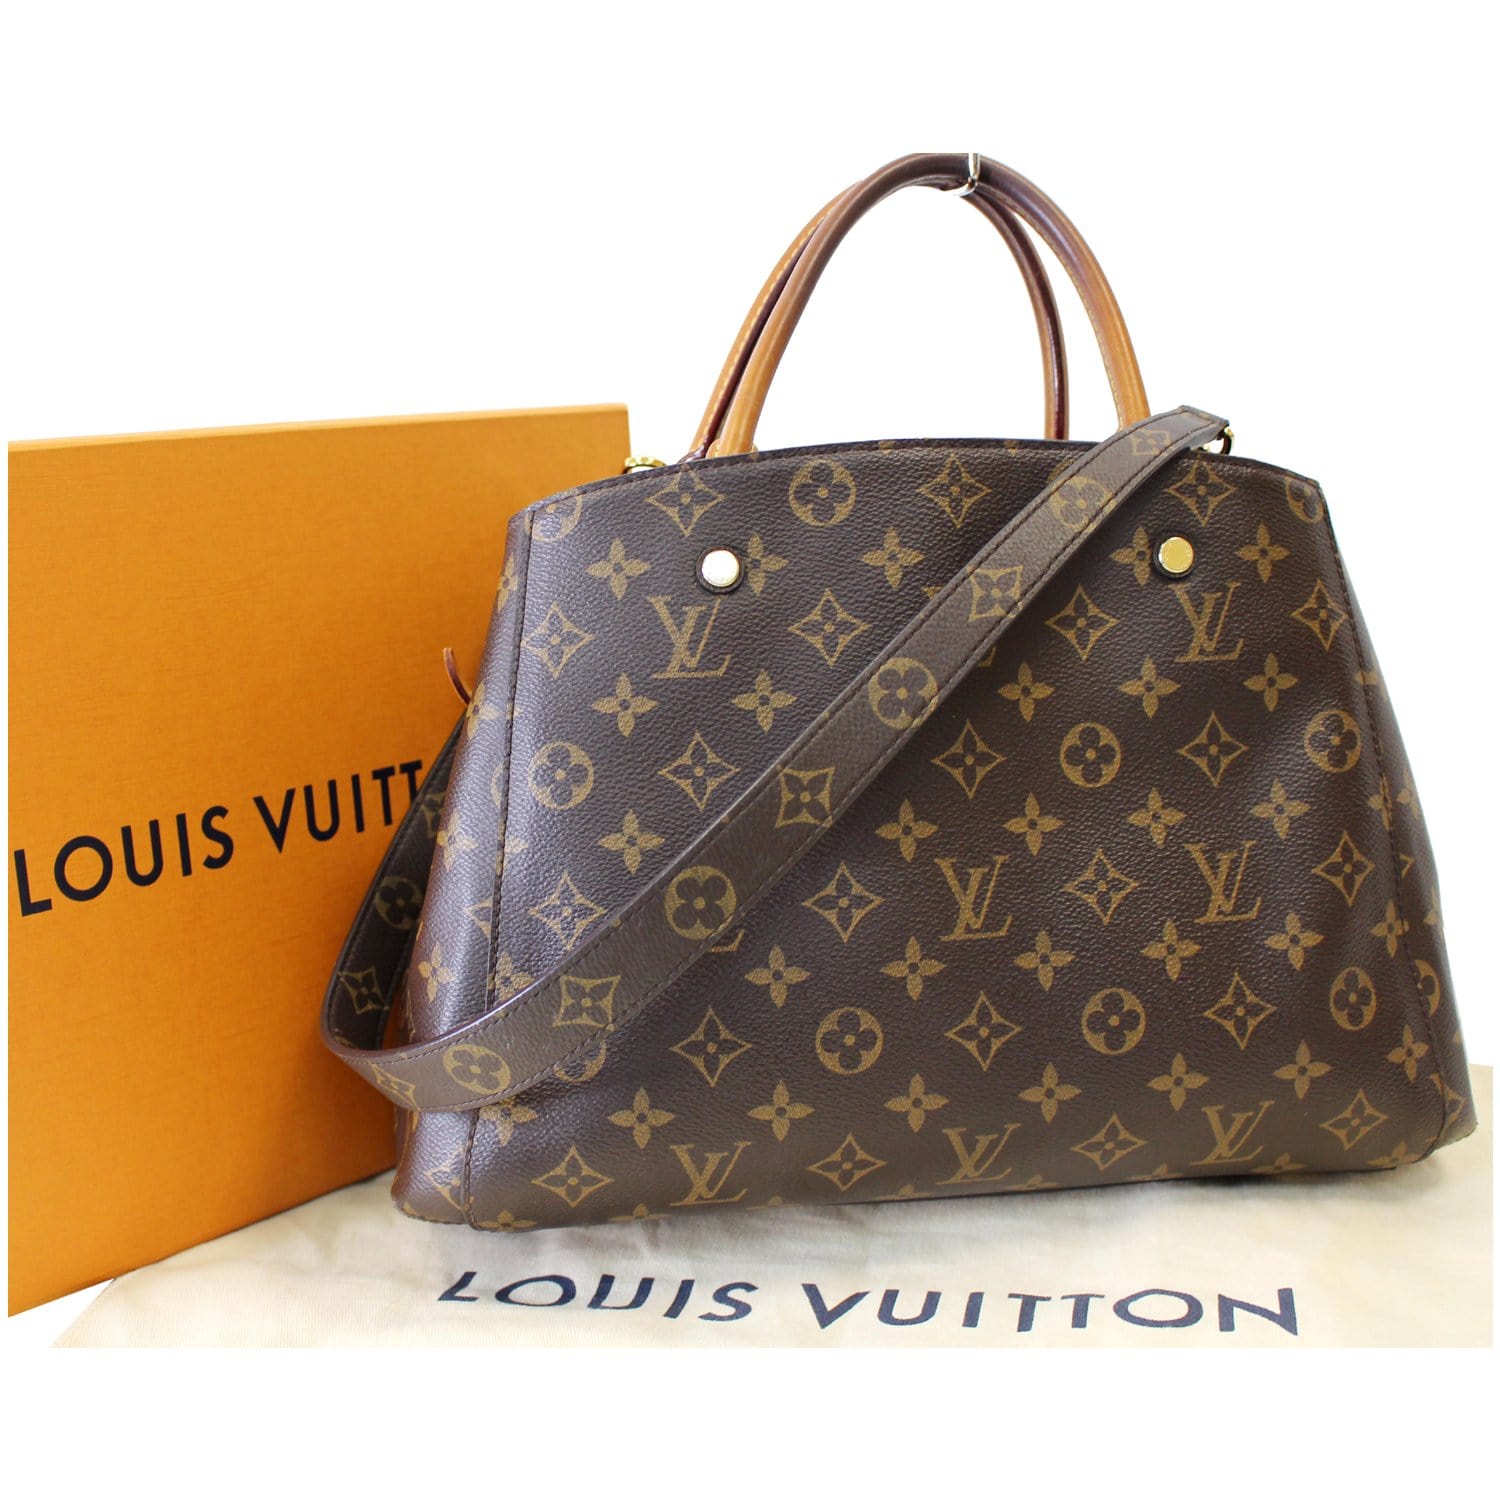 Louis Vuitton Montaigne MM bag